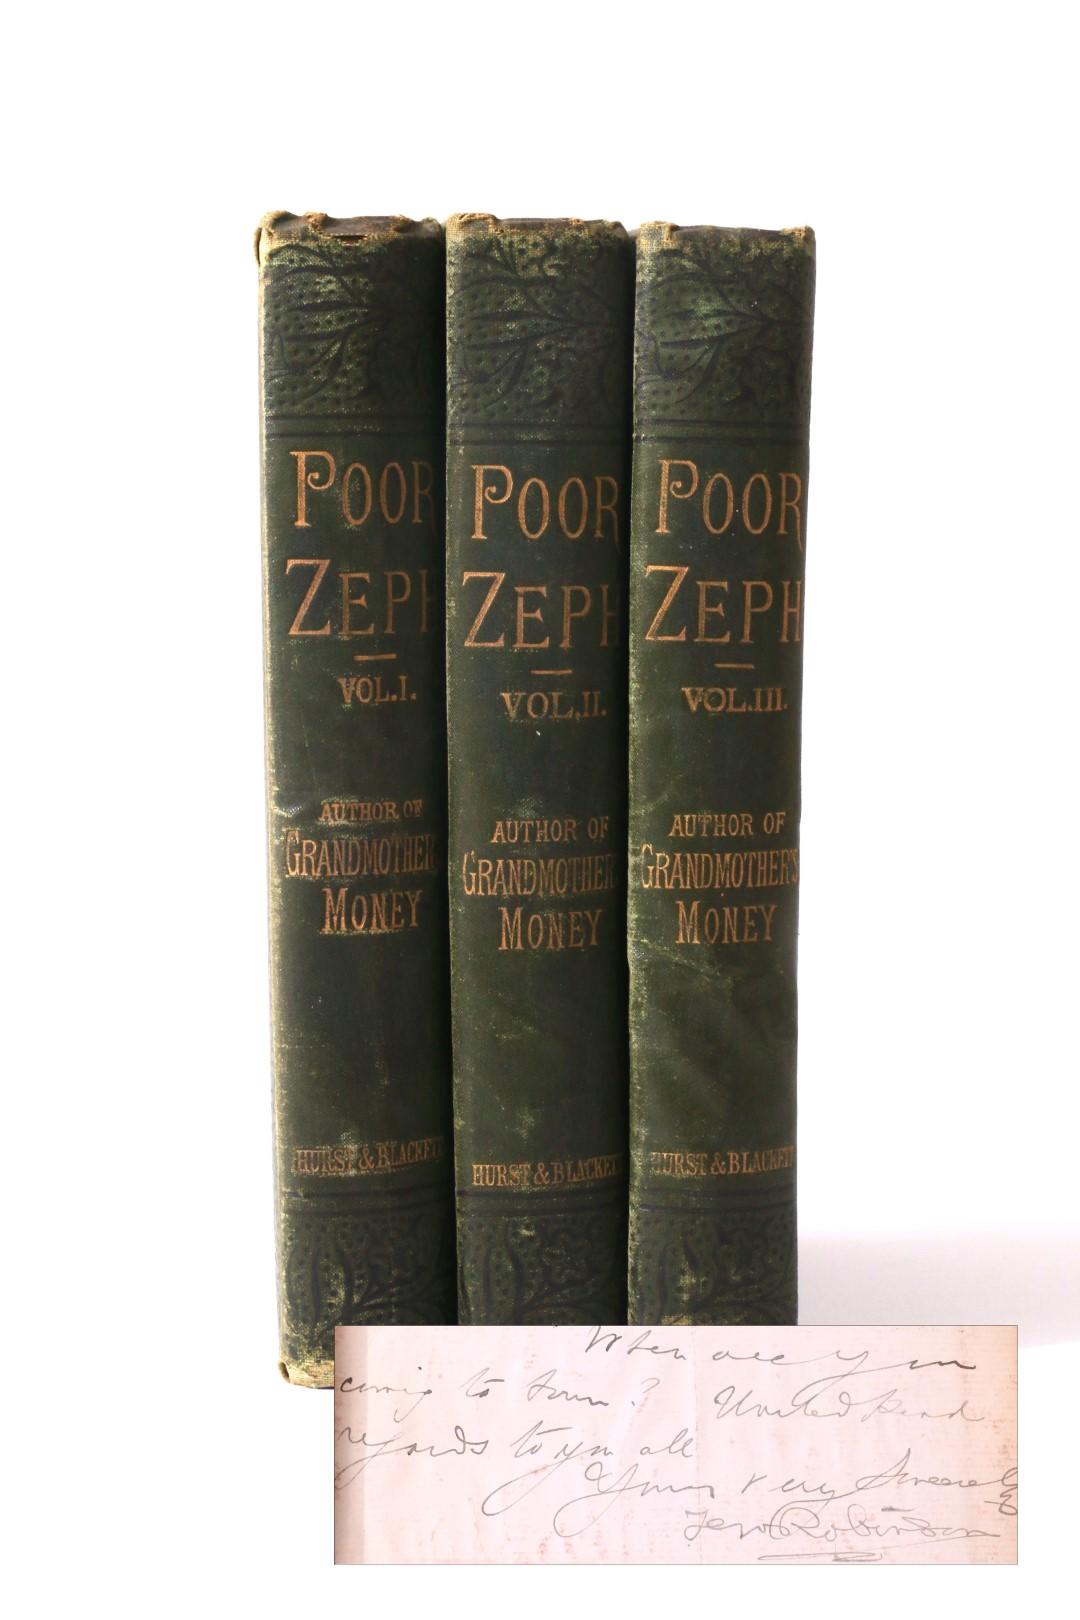 F.W. Robinson - Poor Zeph - Hurst & Blackett, 1880, First Edition.